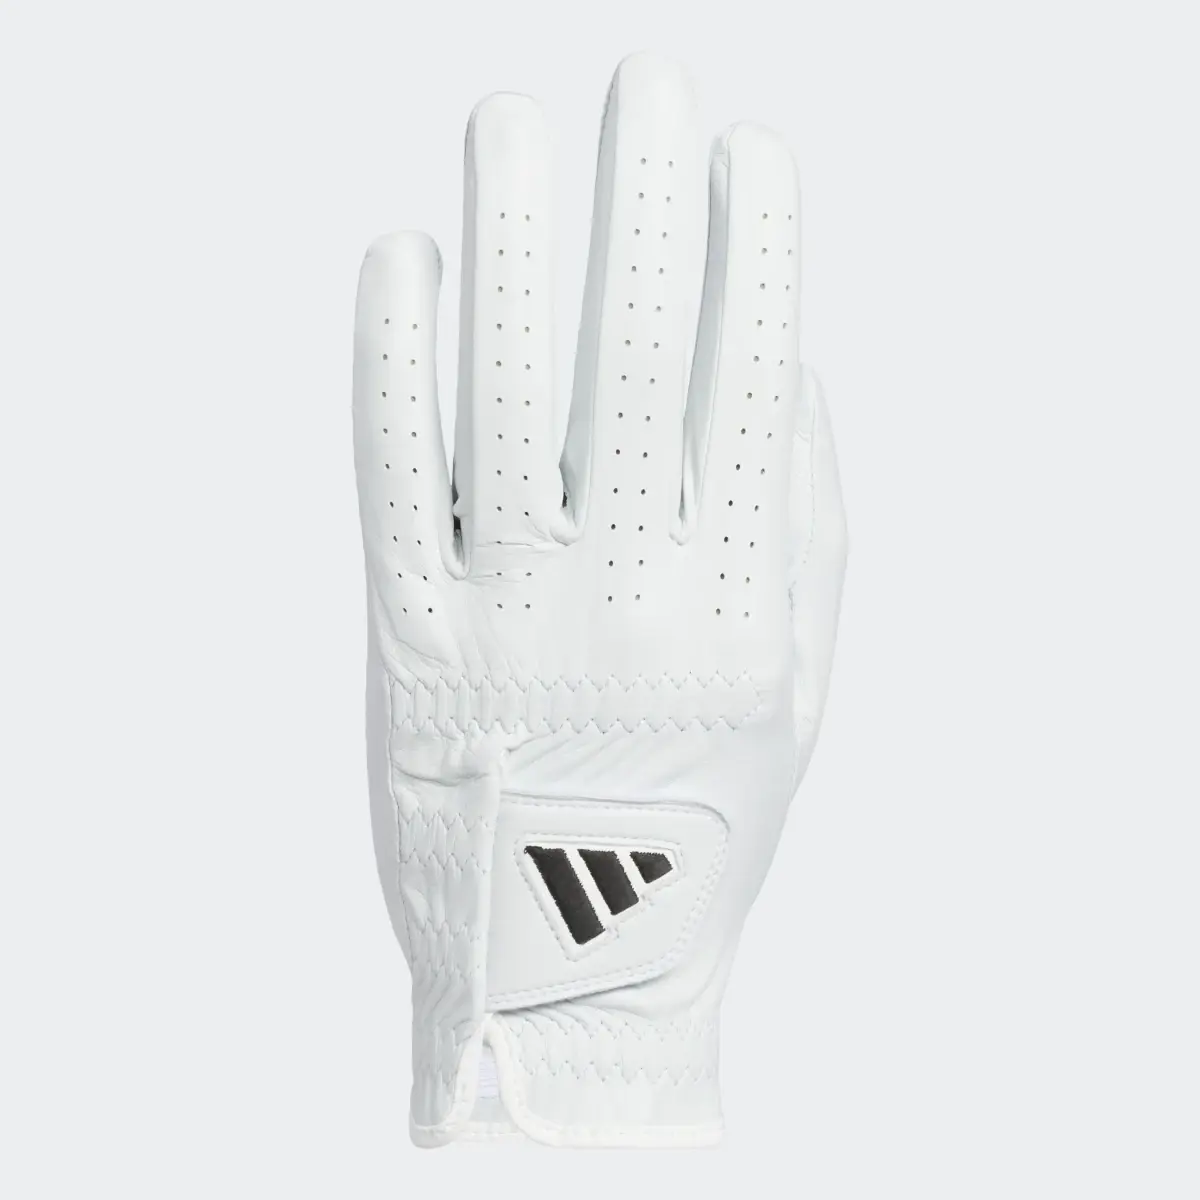 Adidas Ultimate Single Leather Left Glove. 2